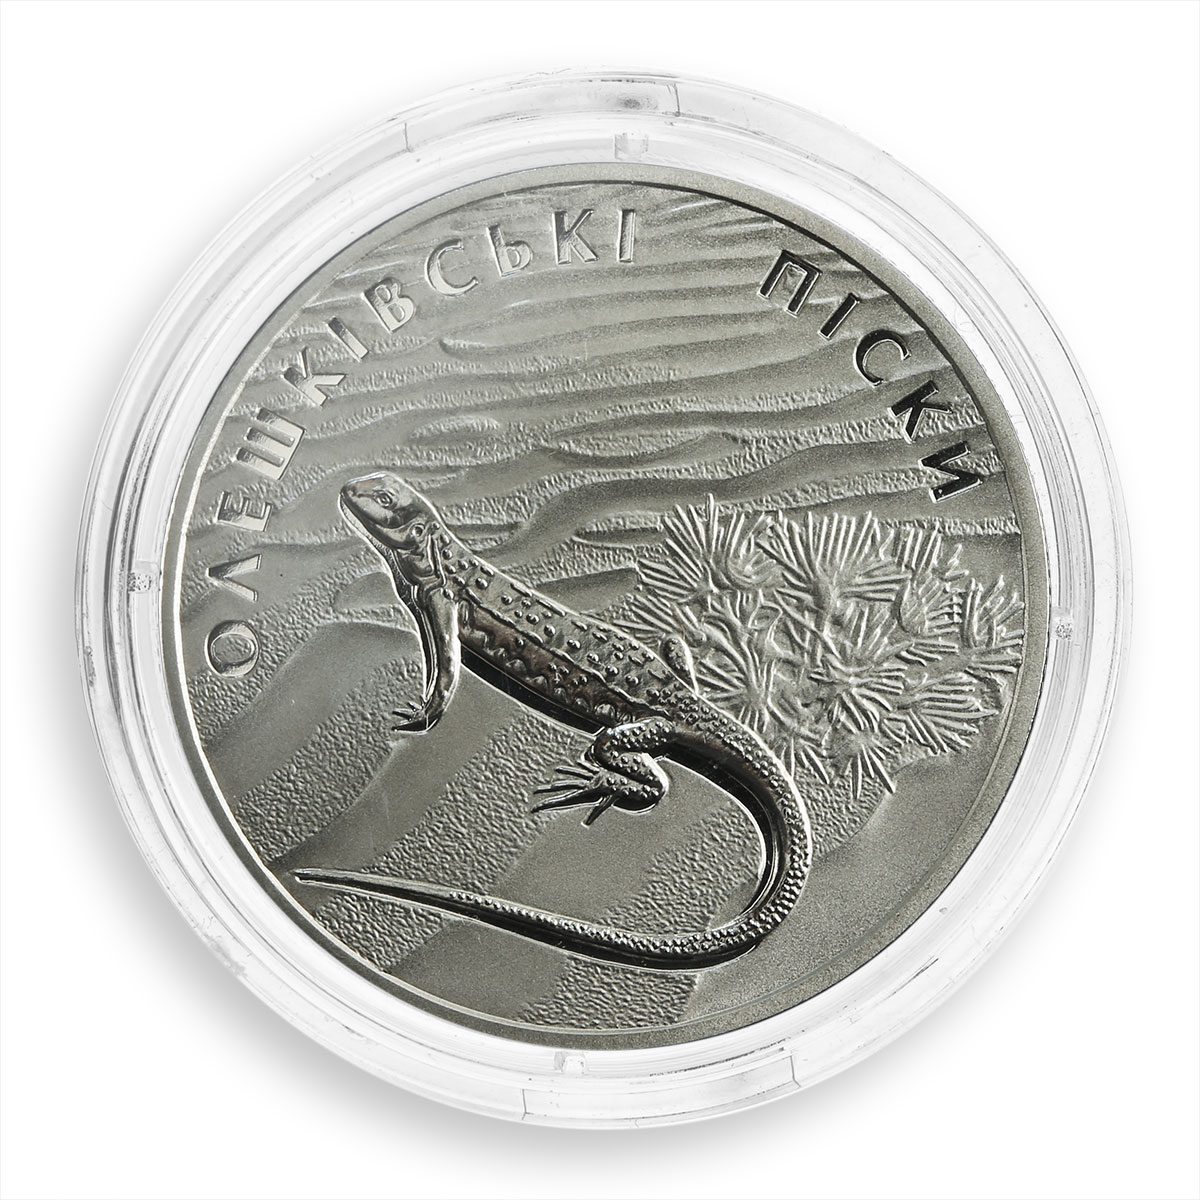 Ukraine, 2 hryvnias, OLESHKY SANDS, Lizard, Nature Park, nickel silver coin 2015